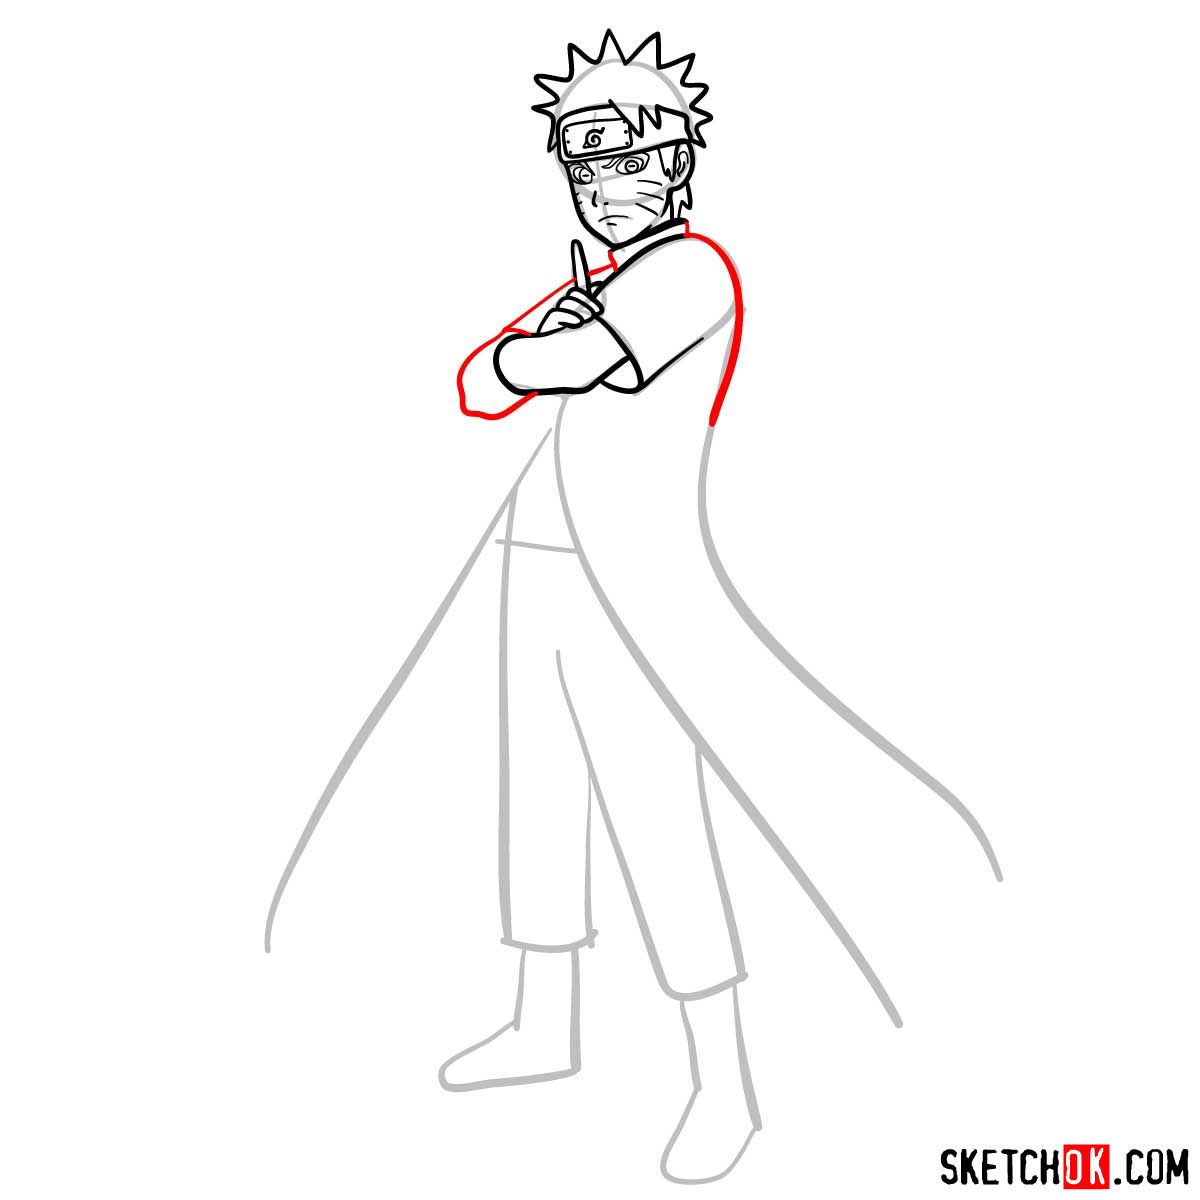 How to draw Naruto Uzumaki (Naruto anime) - Sketchok easy drawing guides